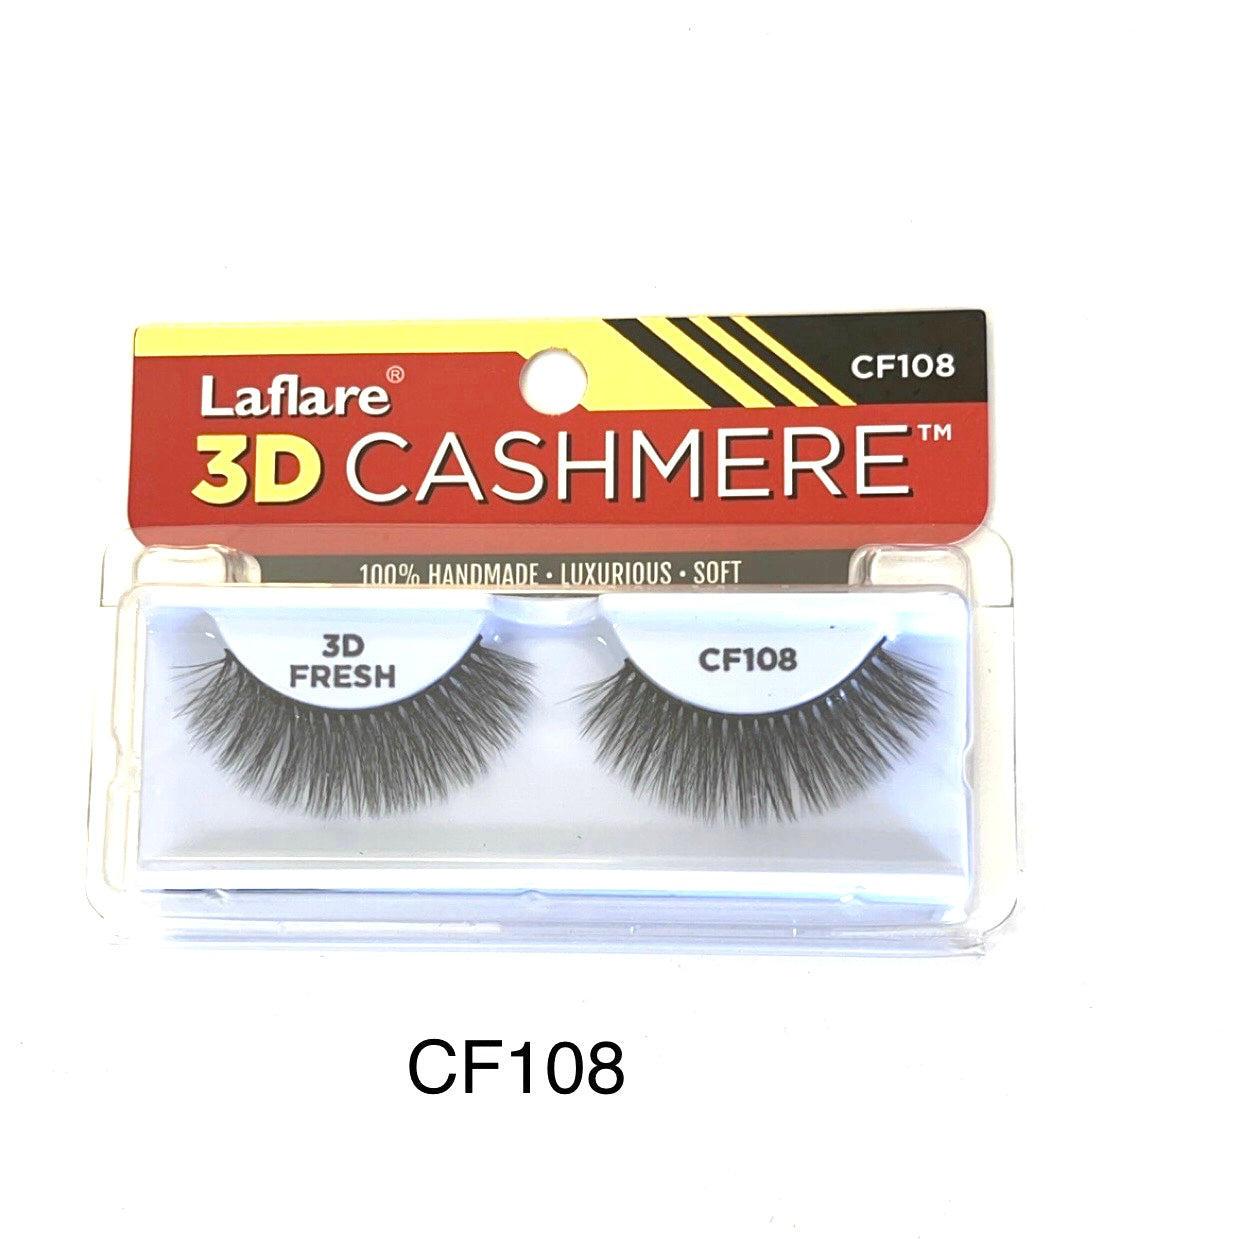 Laflare 3D Cashmere CF108